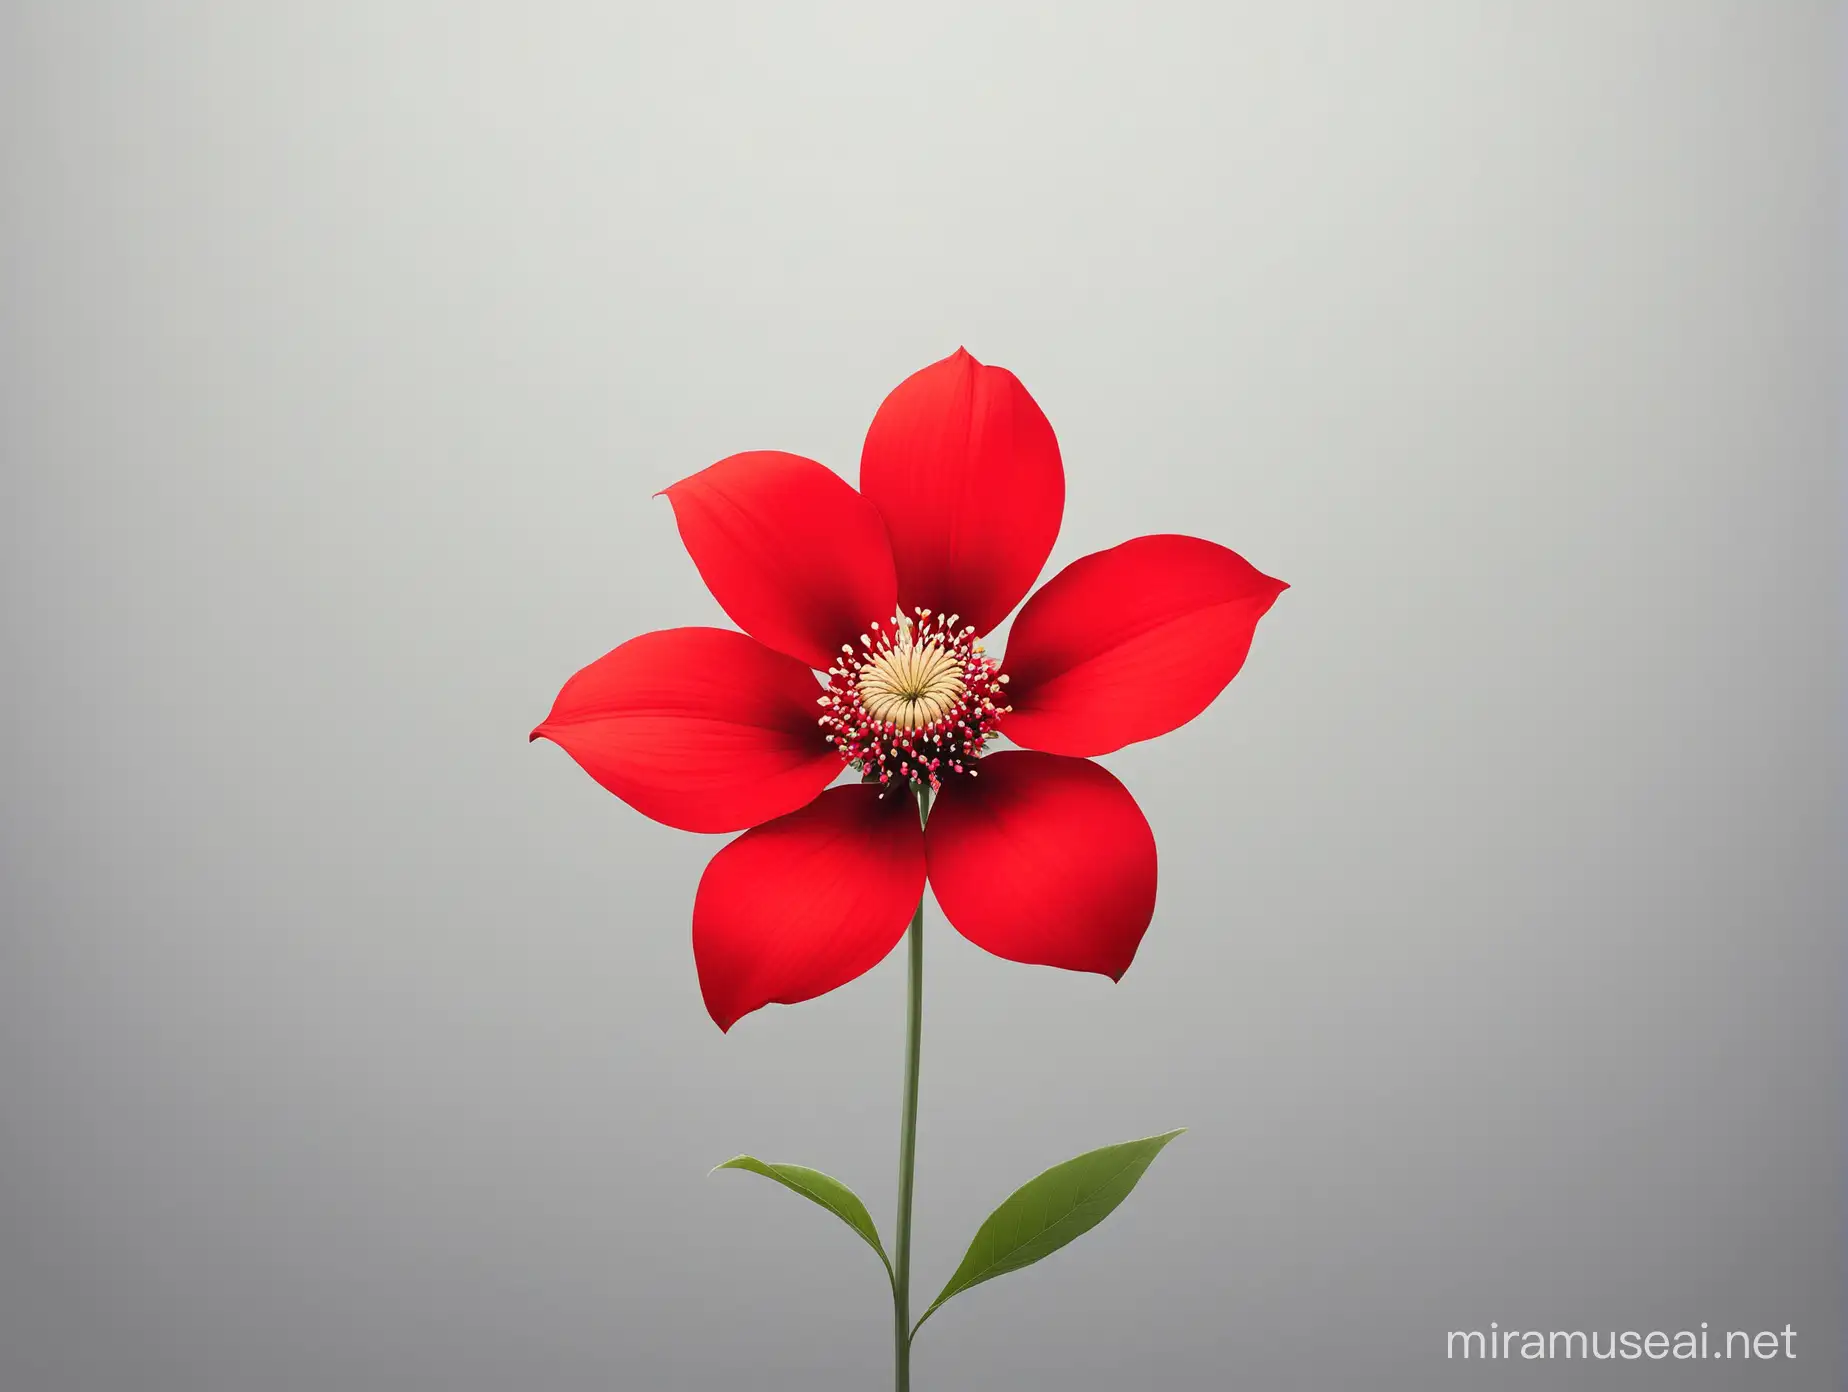 Vibrant Red Flower Blossoming in Serene Gray Background